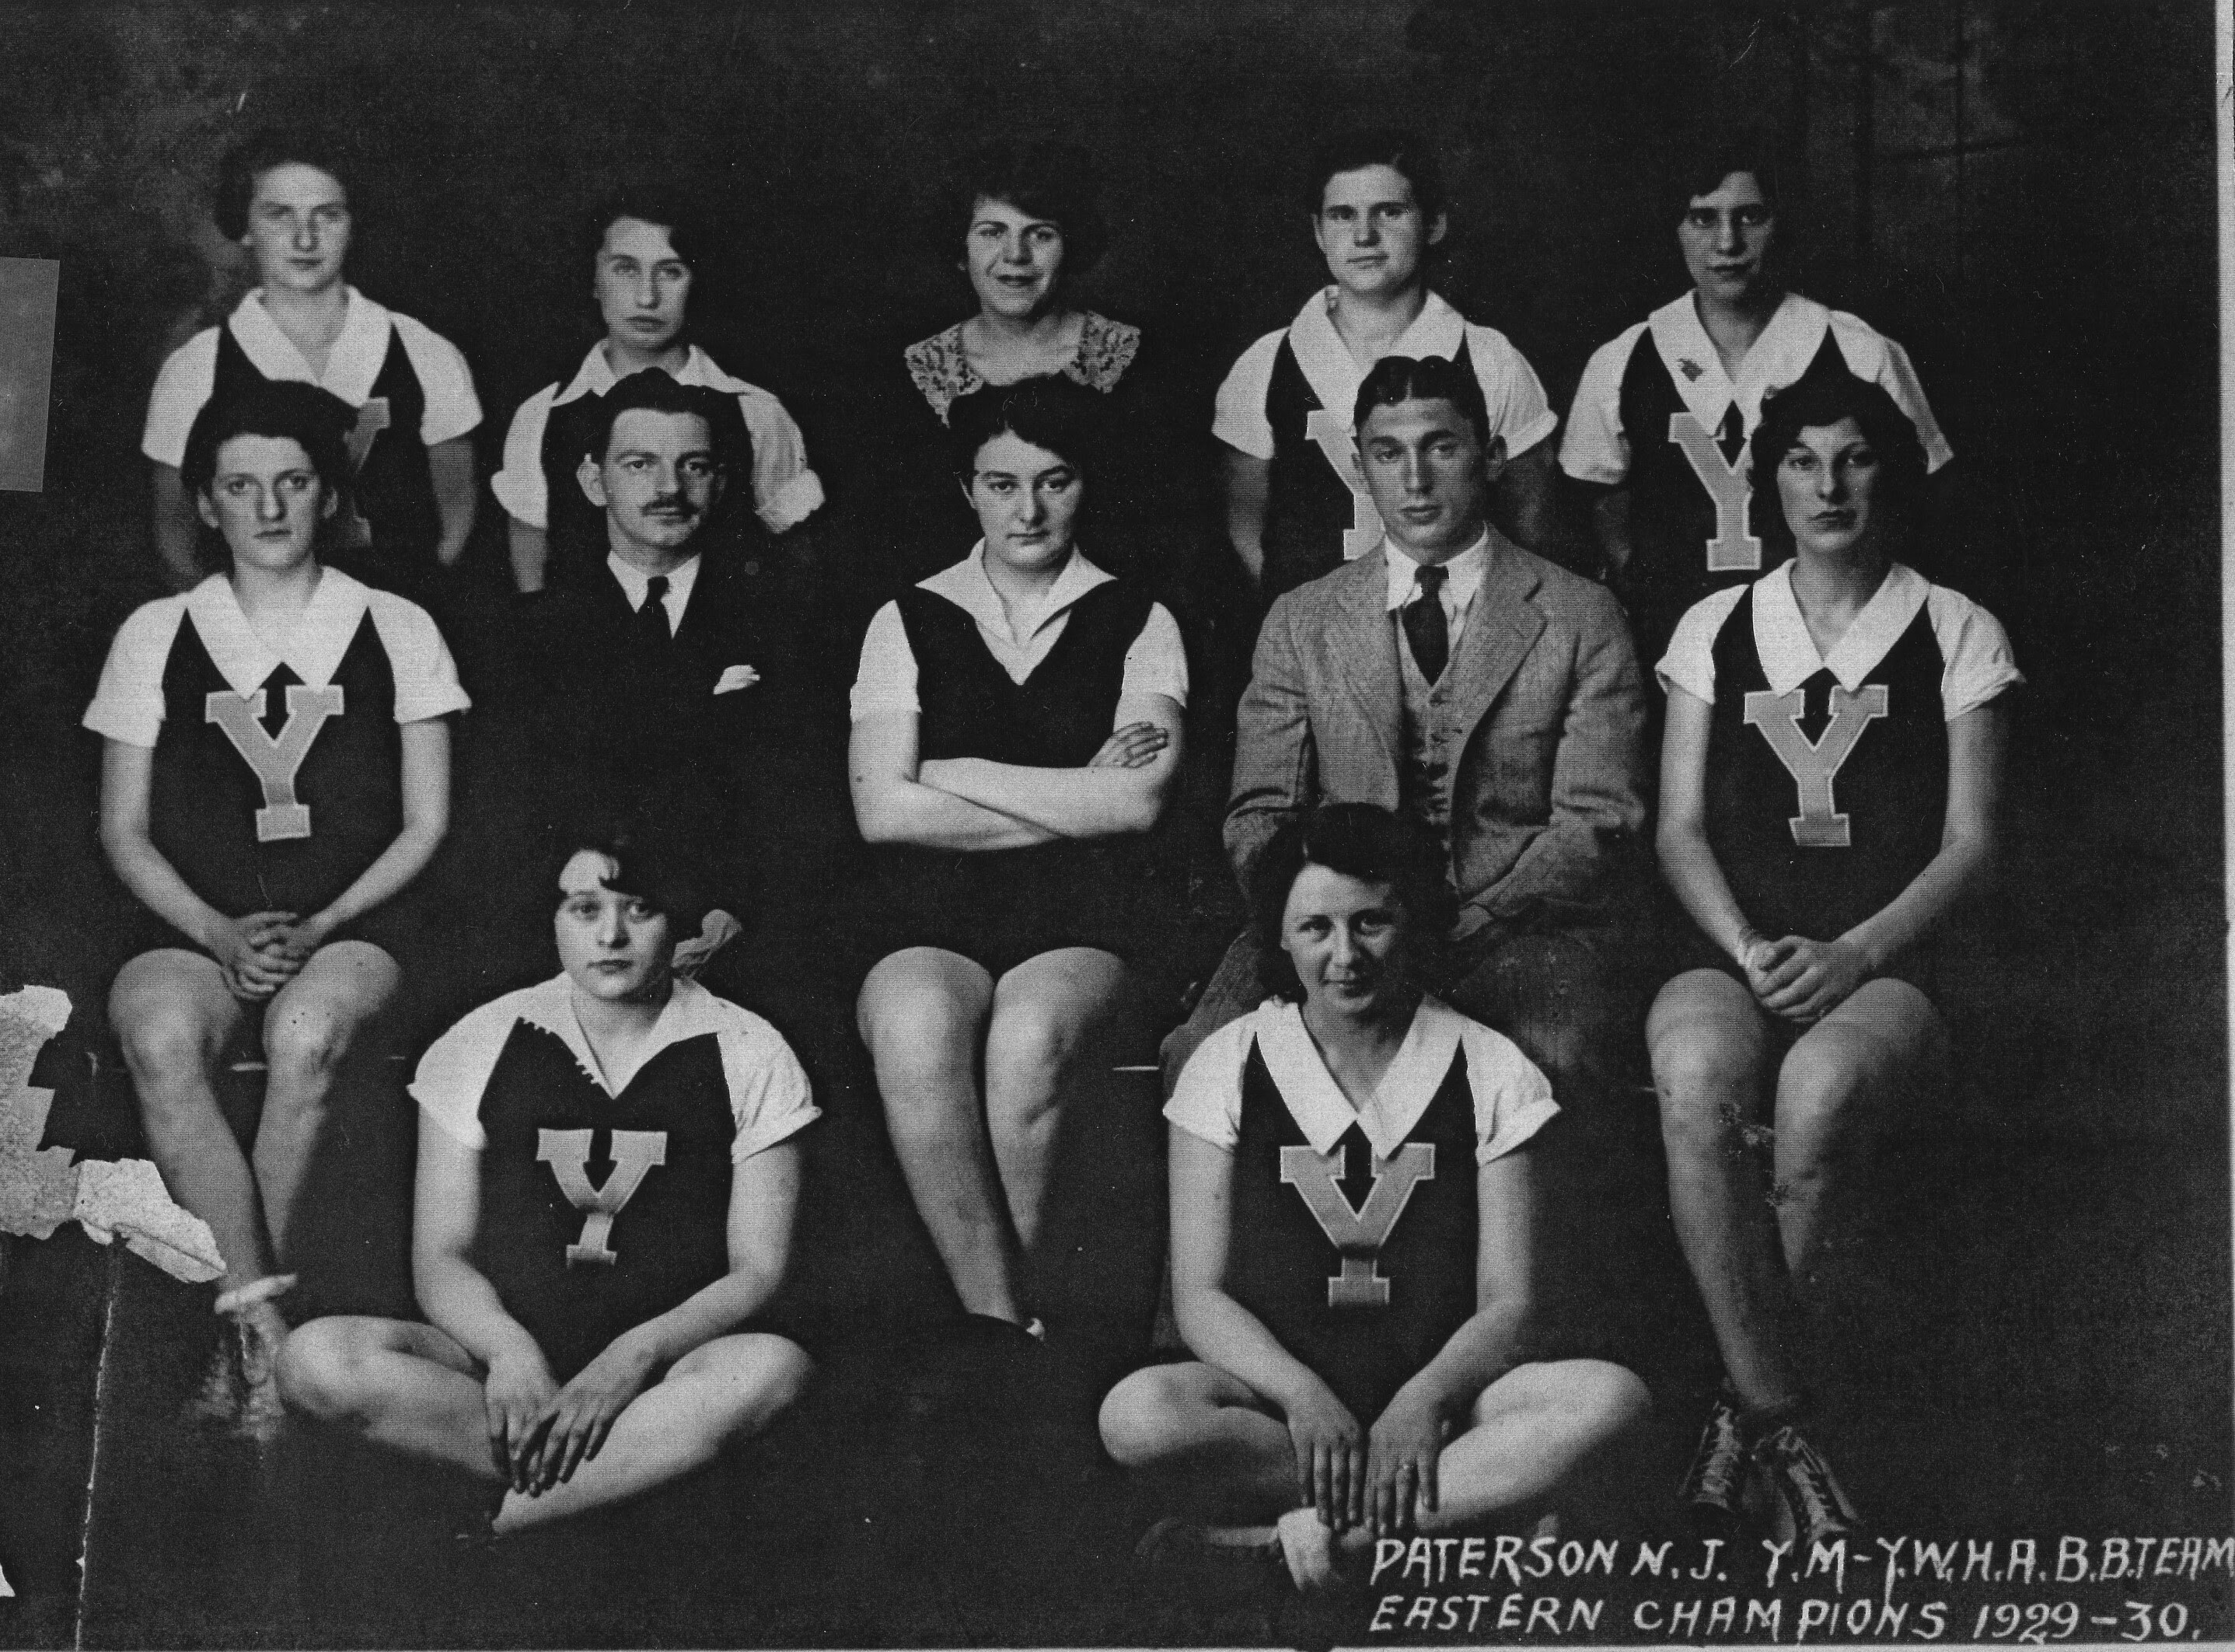 Paterson YM-YWHA women’s basketball team Eastern Champs 1929-30.